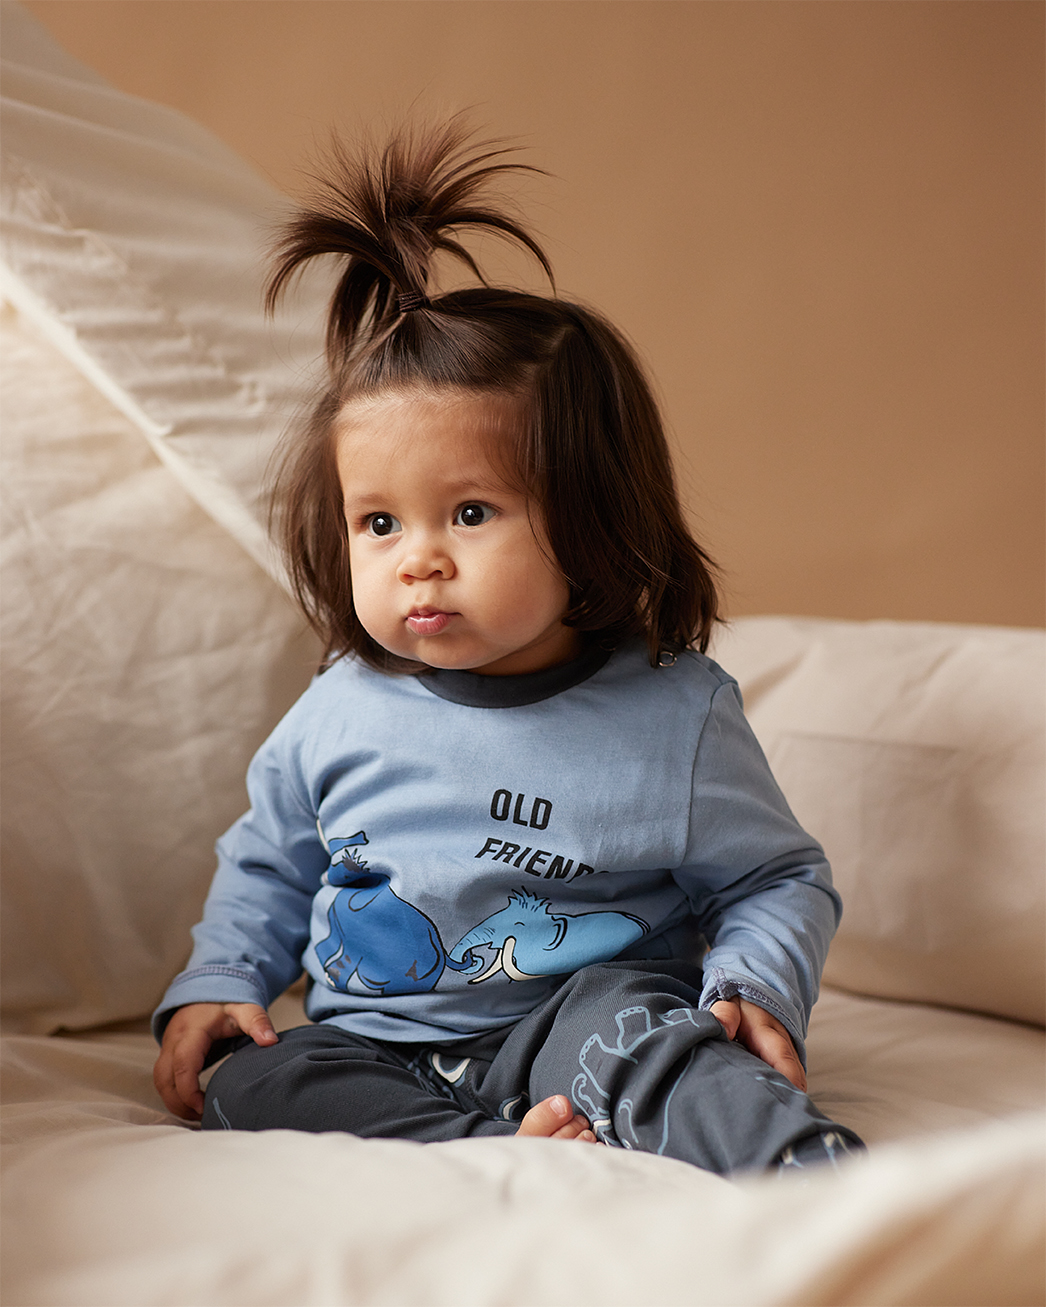 Dečak beba sedi na krevetu u plavoj pidžami na dug rukav sa motivom slonova